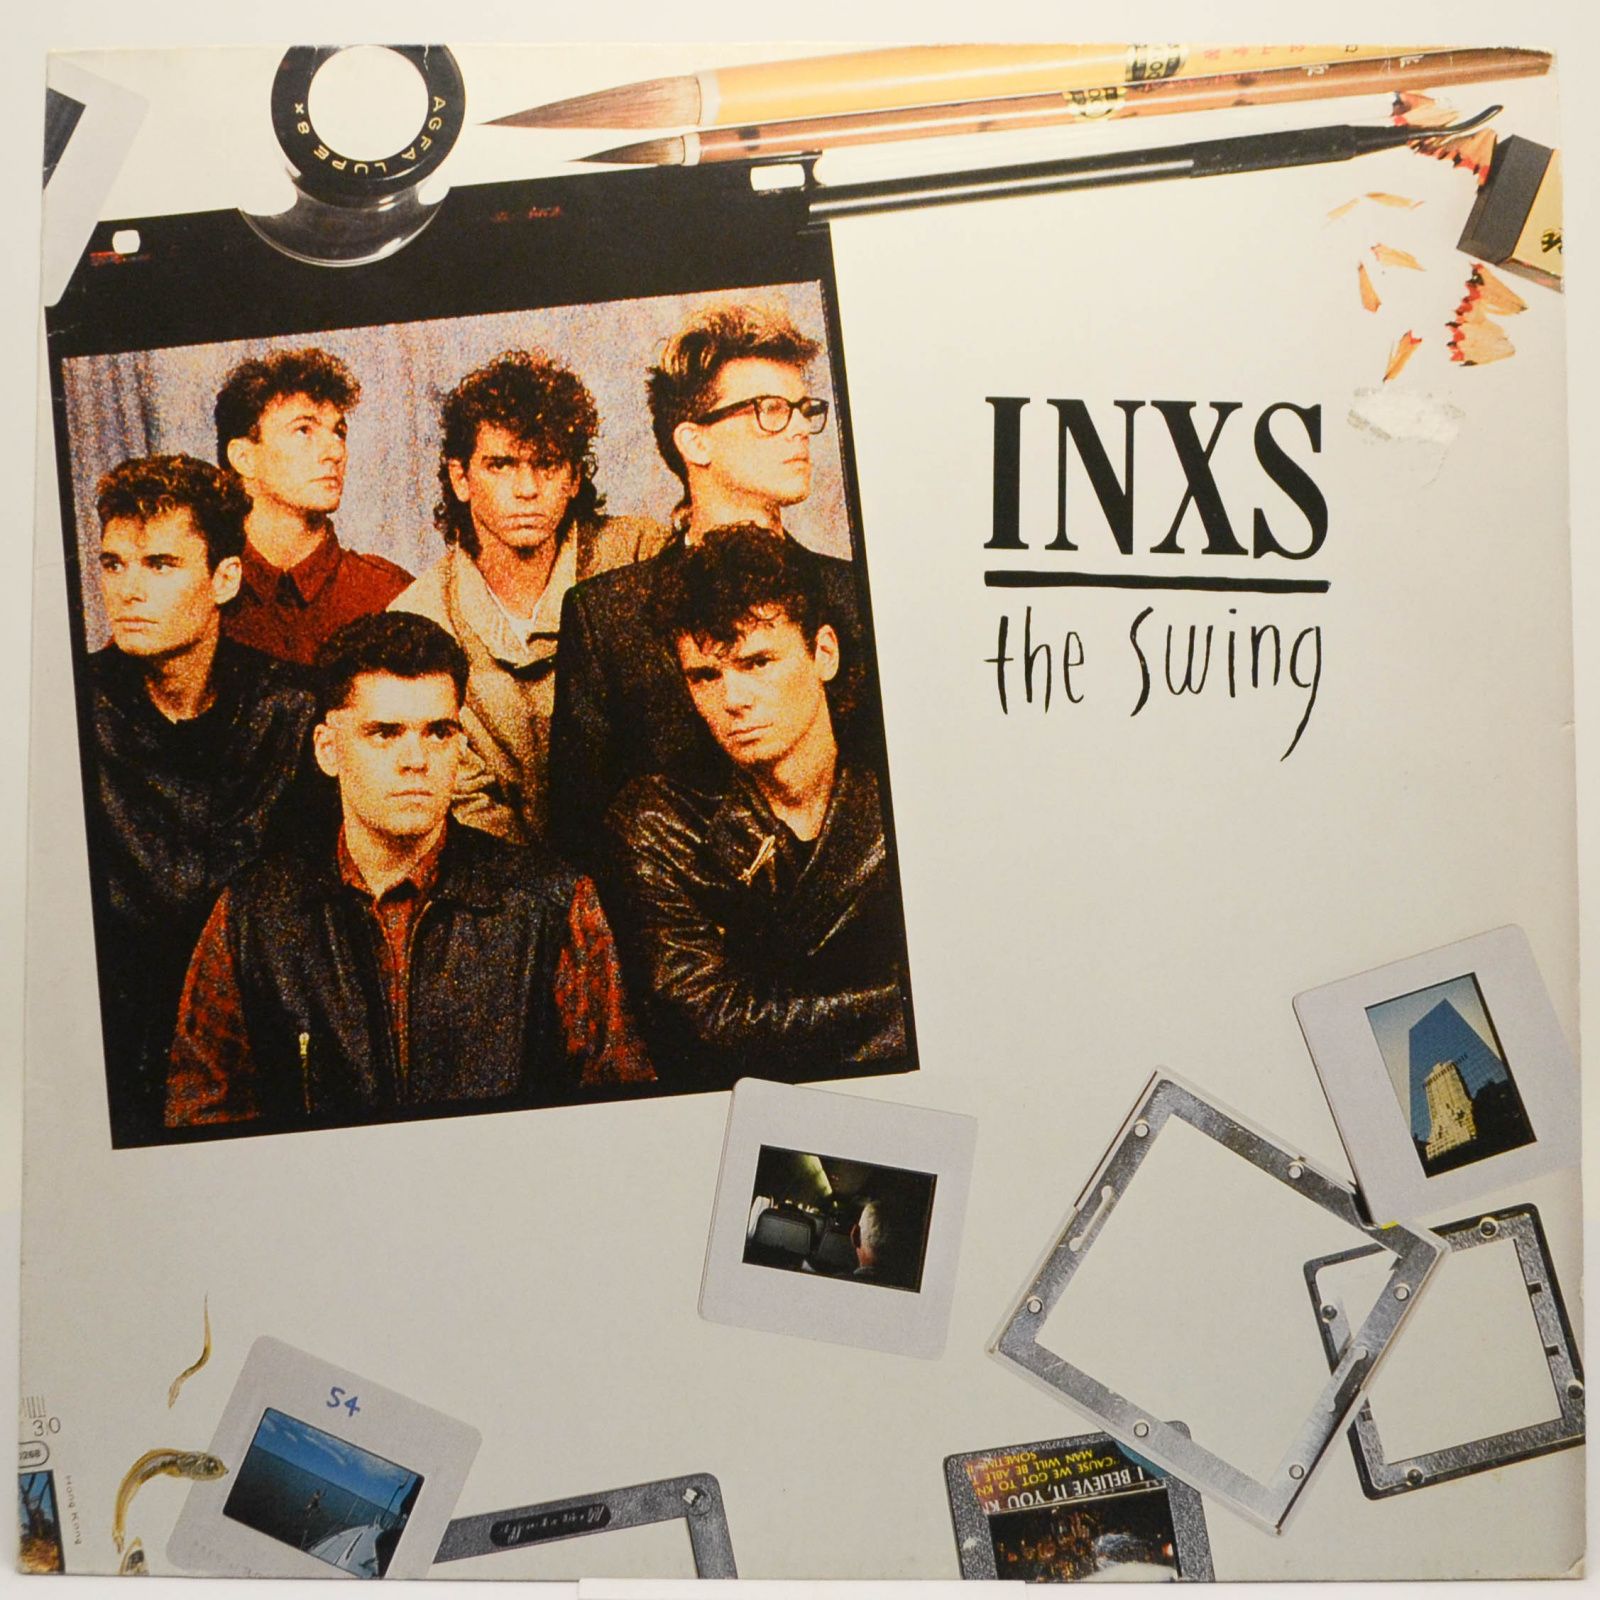 INXS — The Swing, 1984